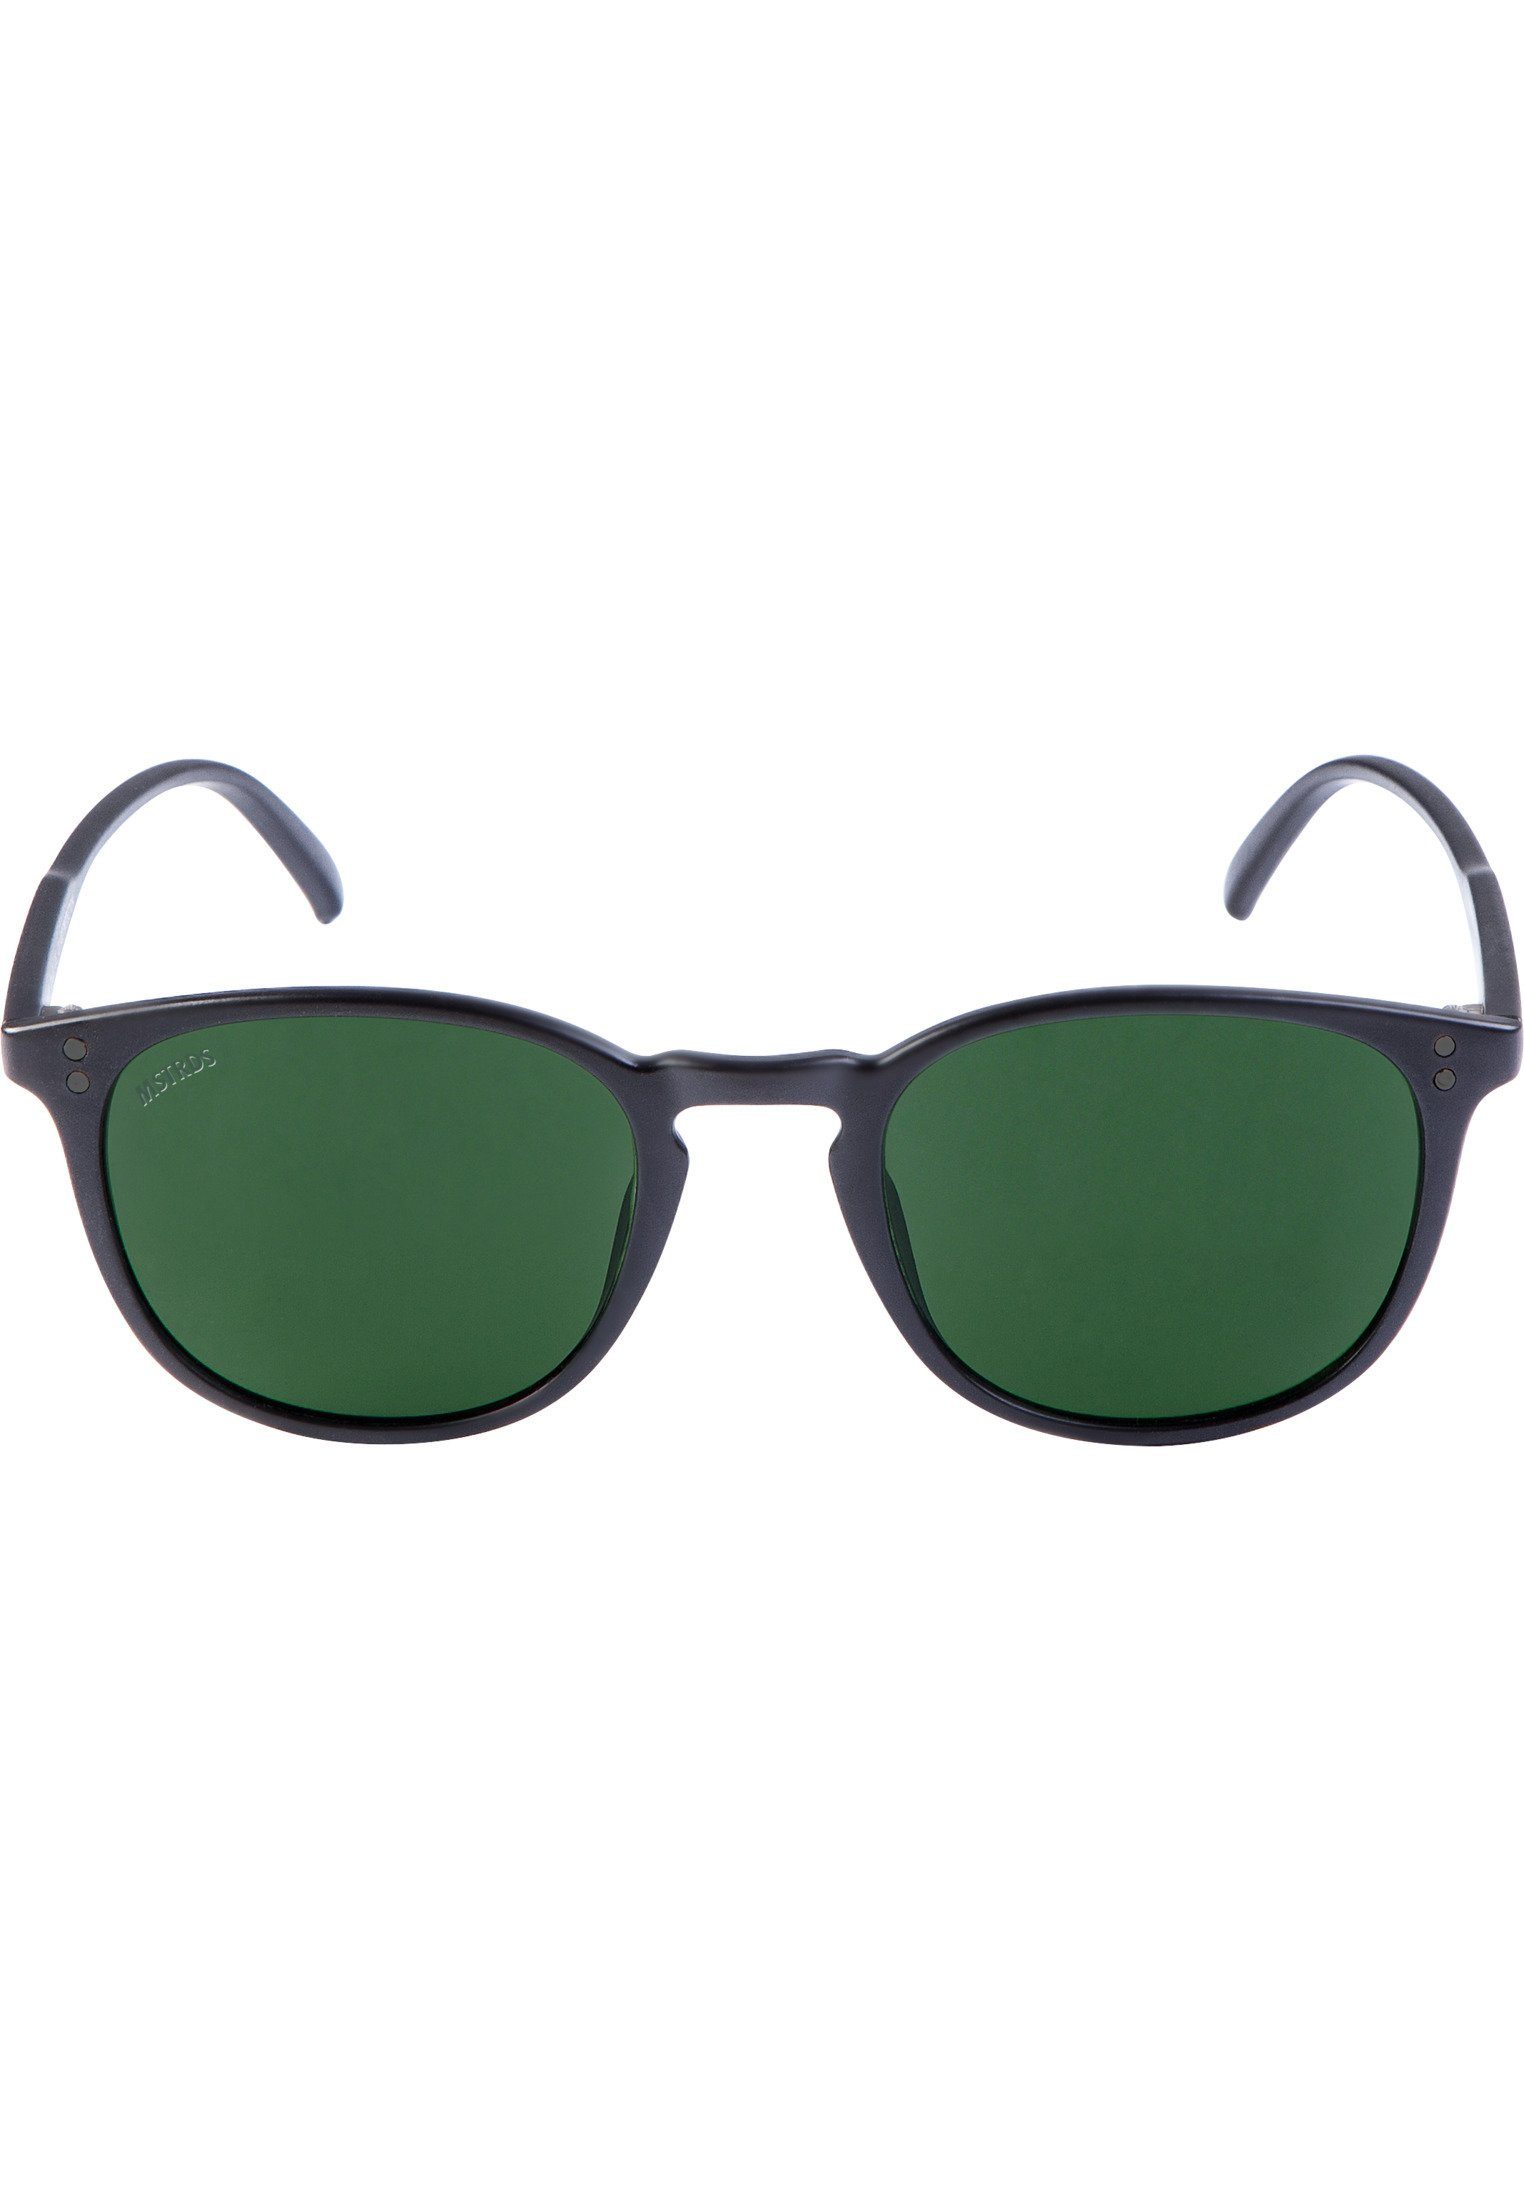 MSTRDS für Sunglasses Arthur, Accessoires Sonnenbrille im Freien geeignet Ideal Sport auch